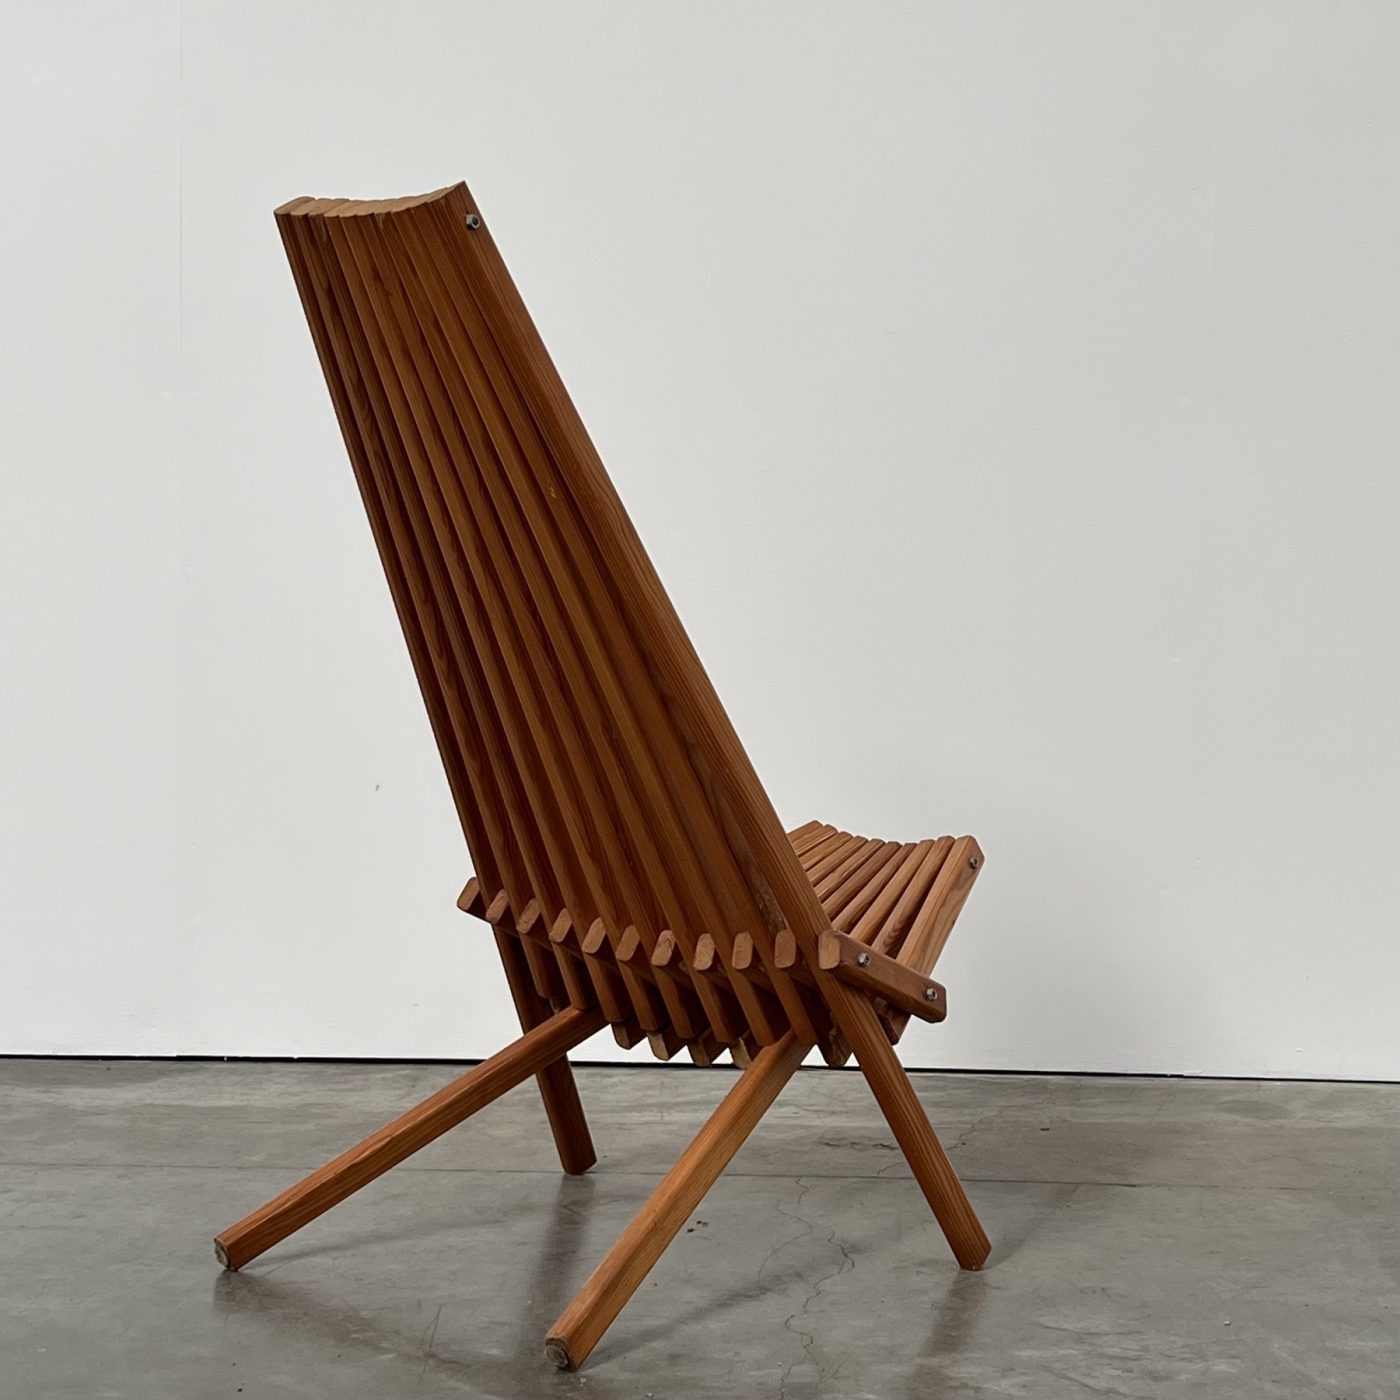 objet-vagabond-folding-chair0003